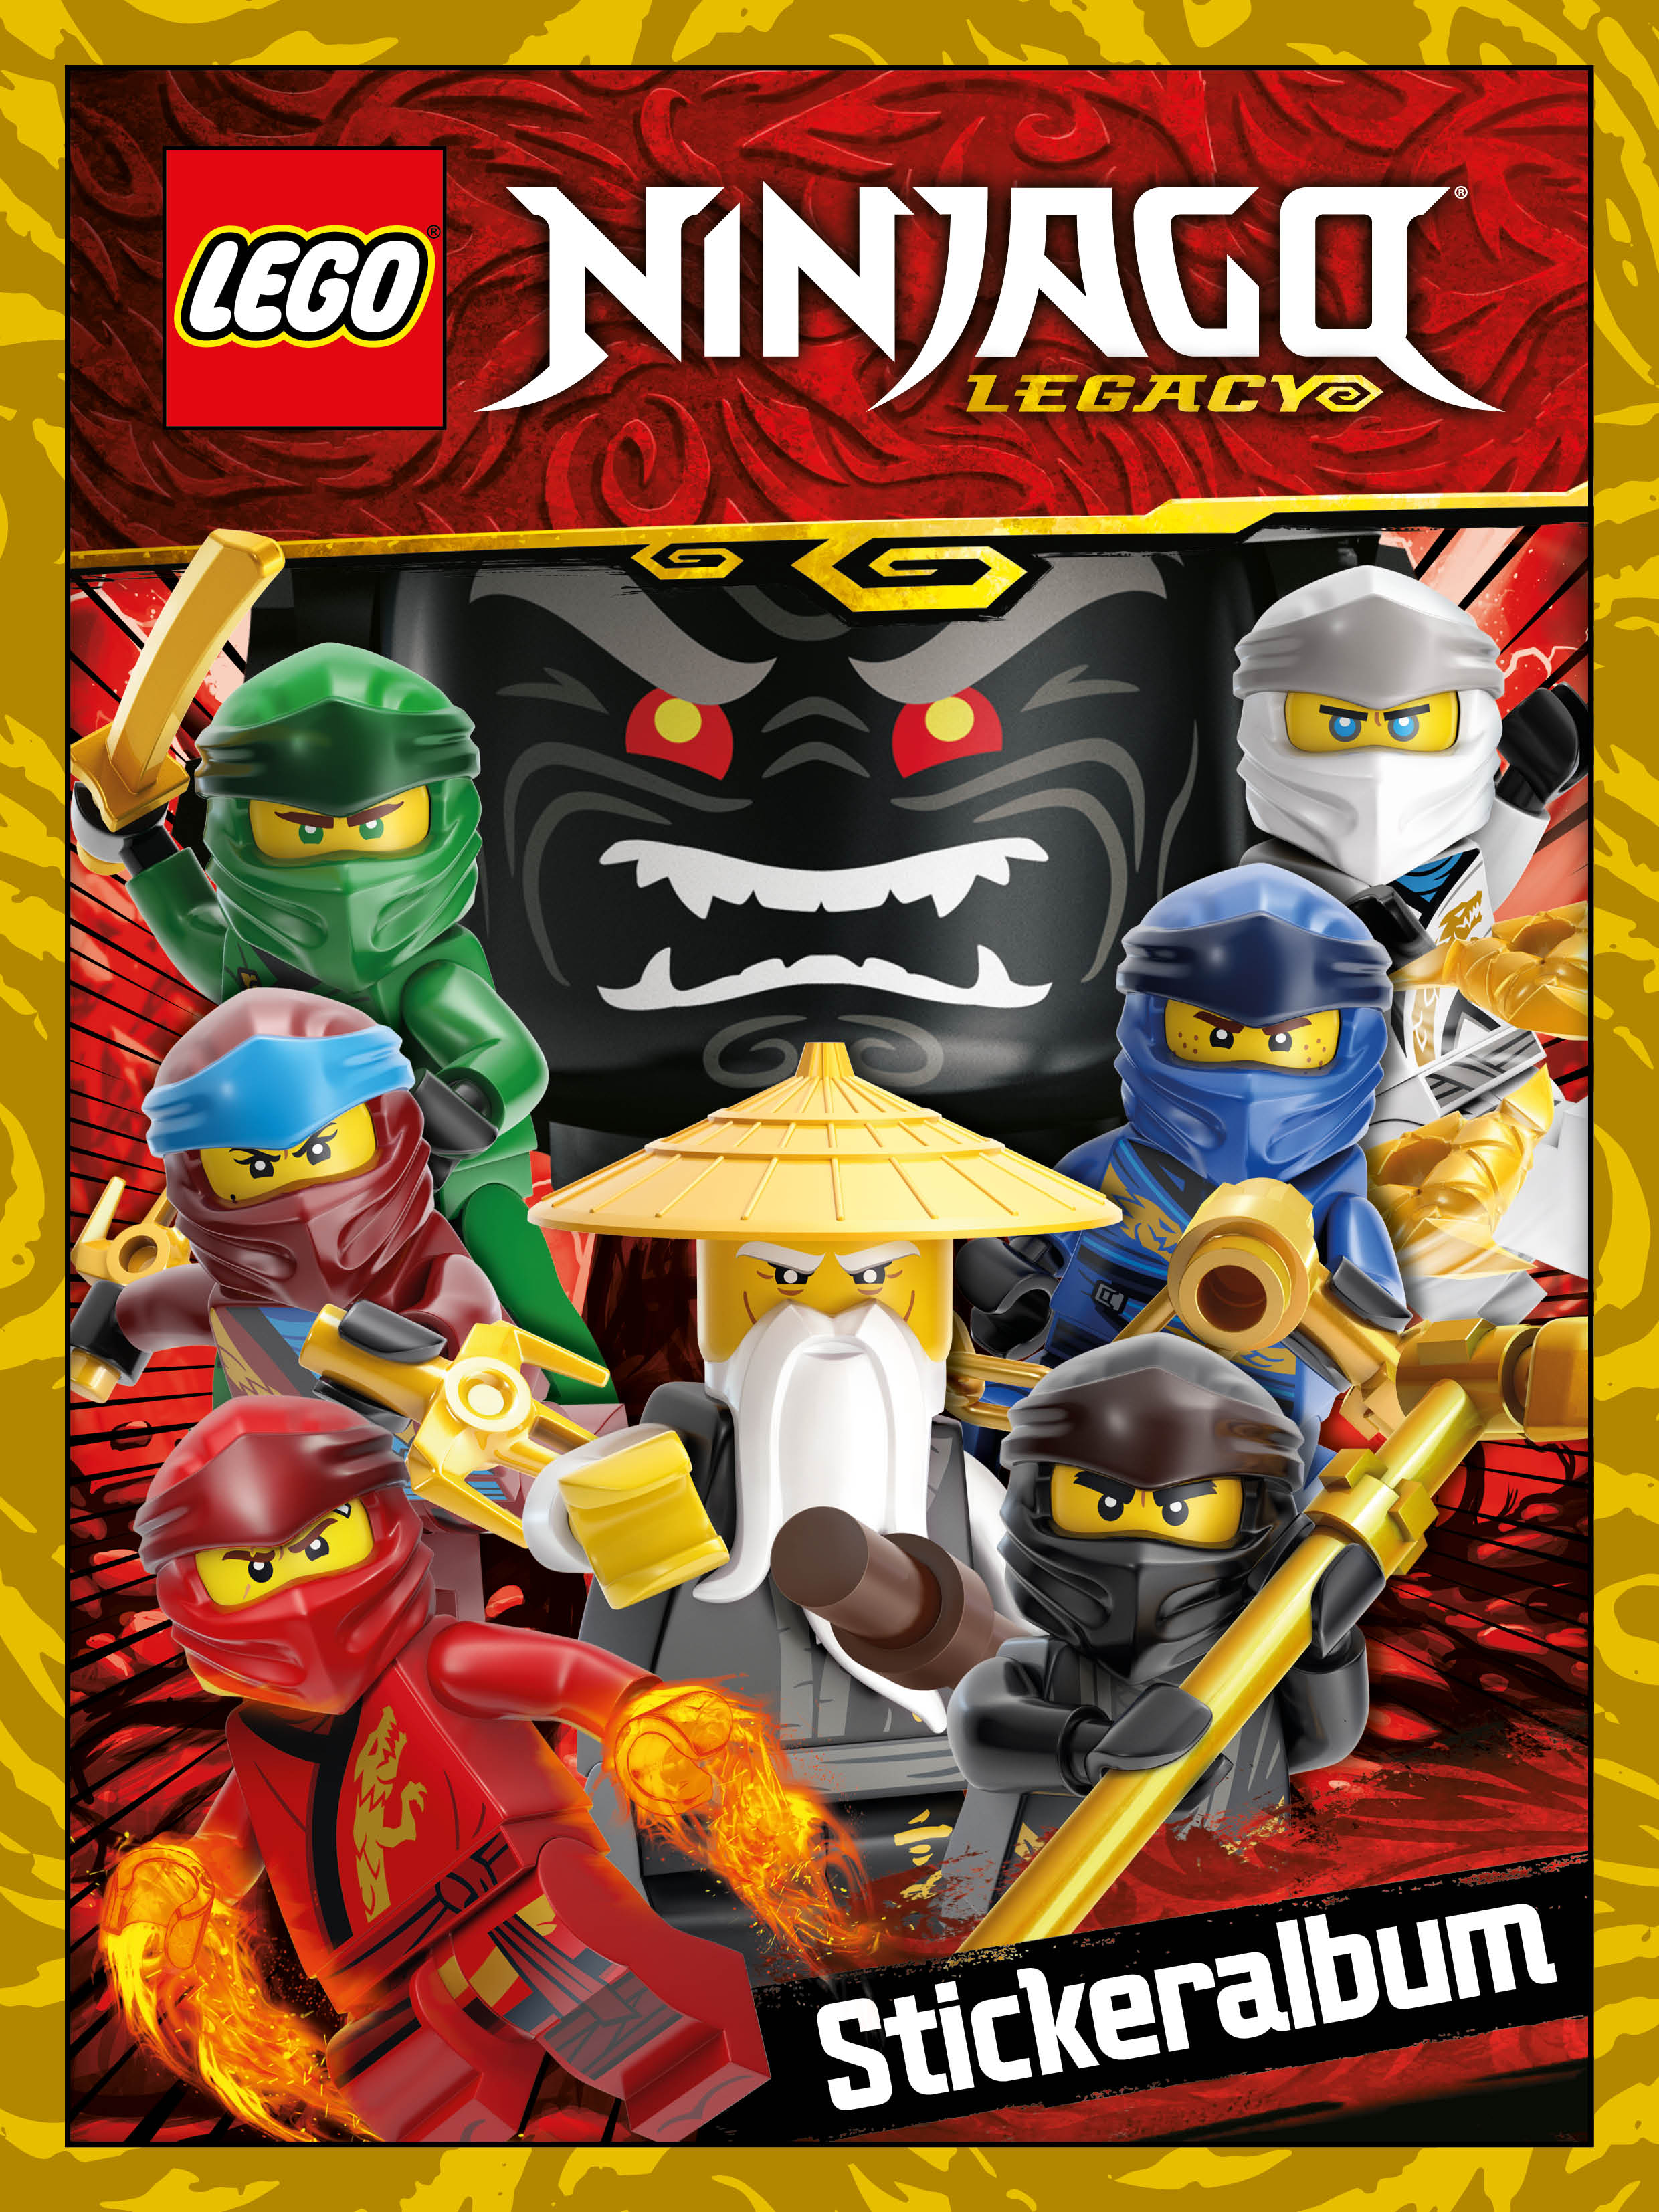 Lego Ninjago Legacy Sticker alle 4 exklusiven 3D-Karten 